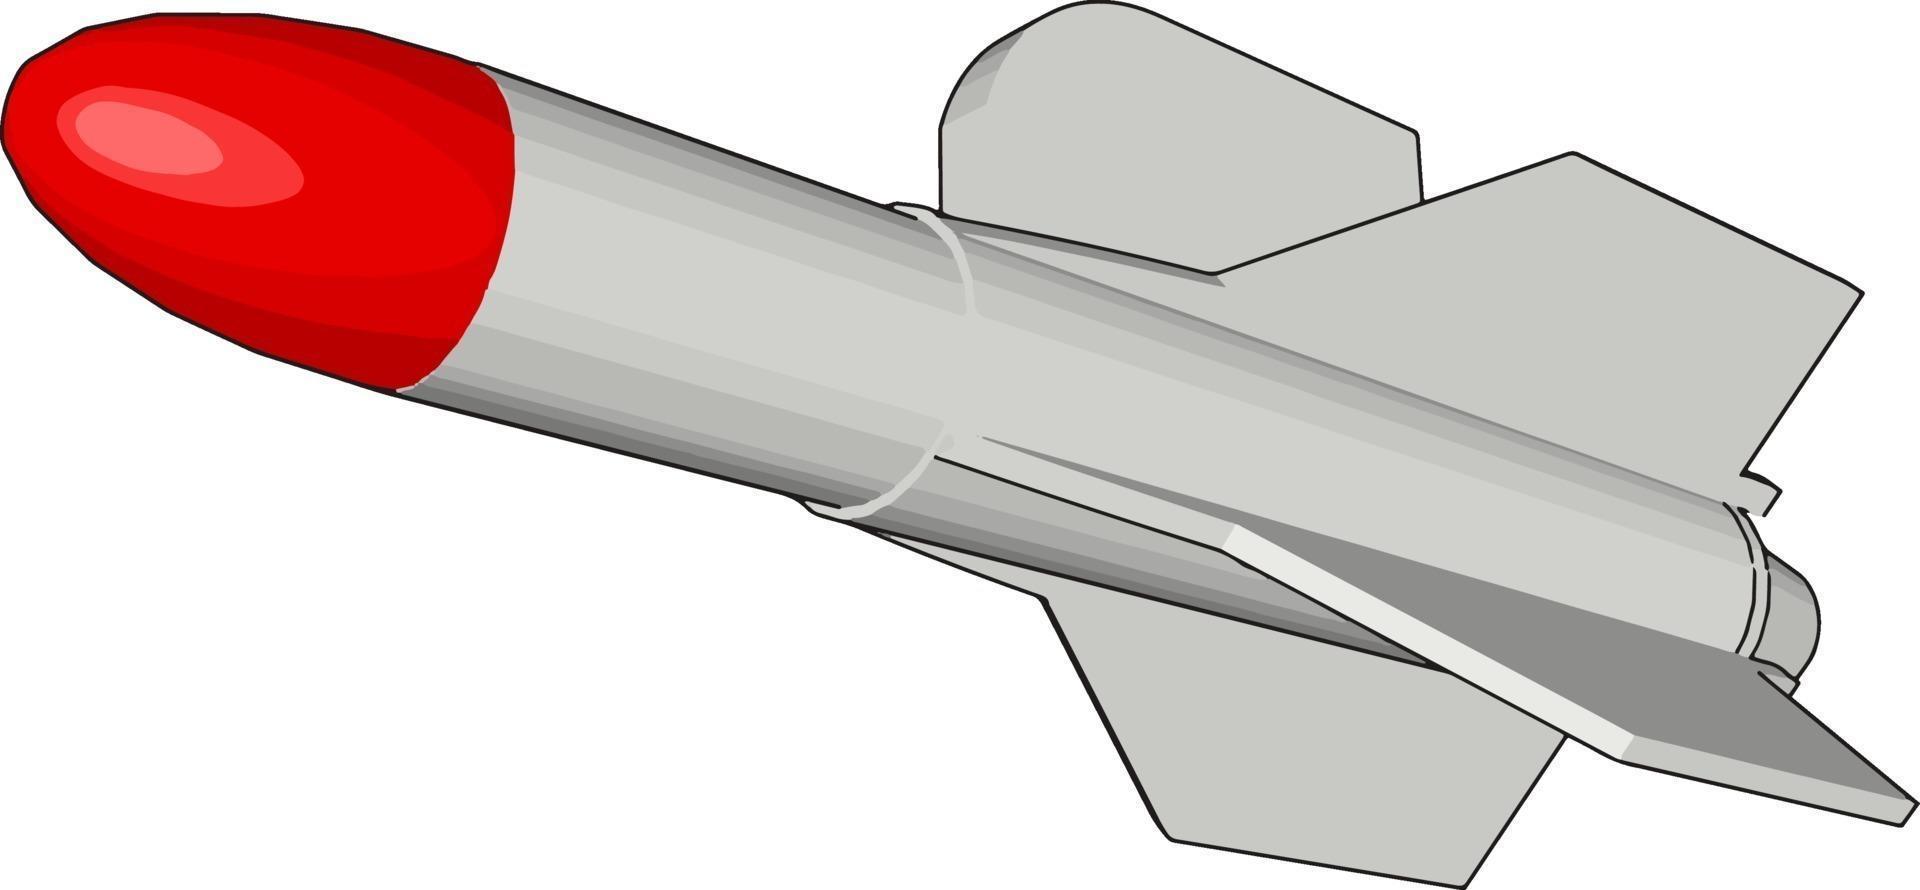 cohete, ilustración, vector sobre fondo blanco.